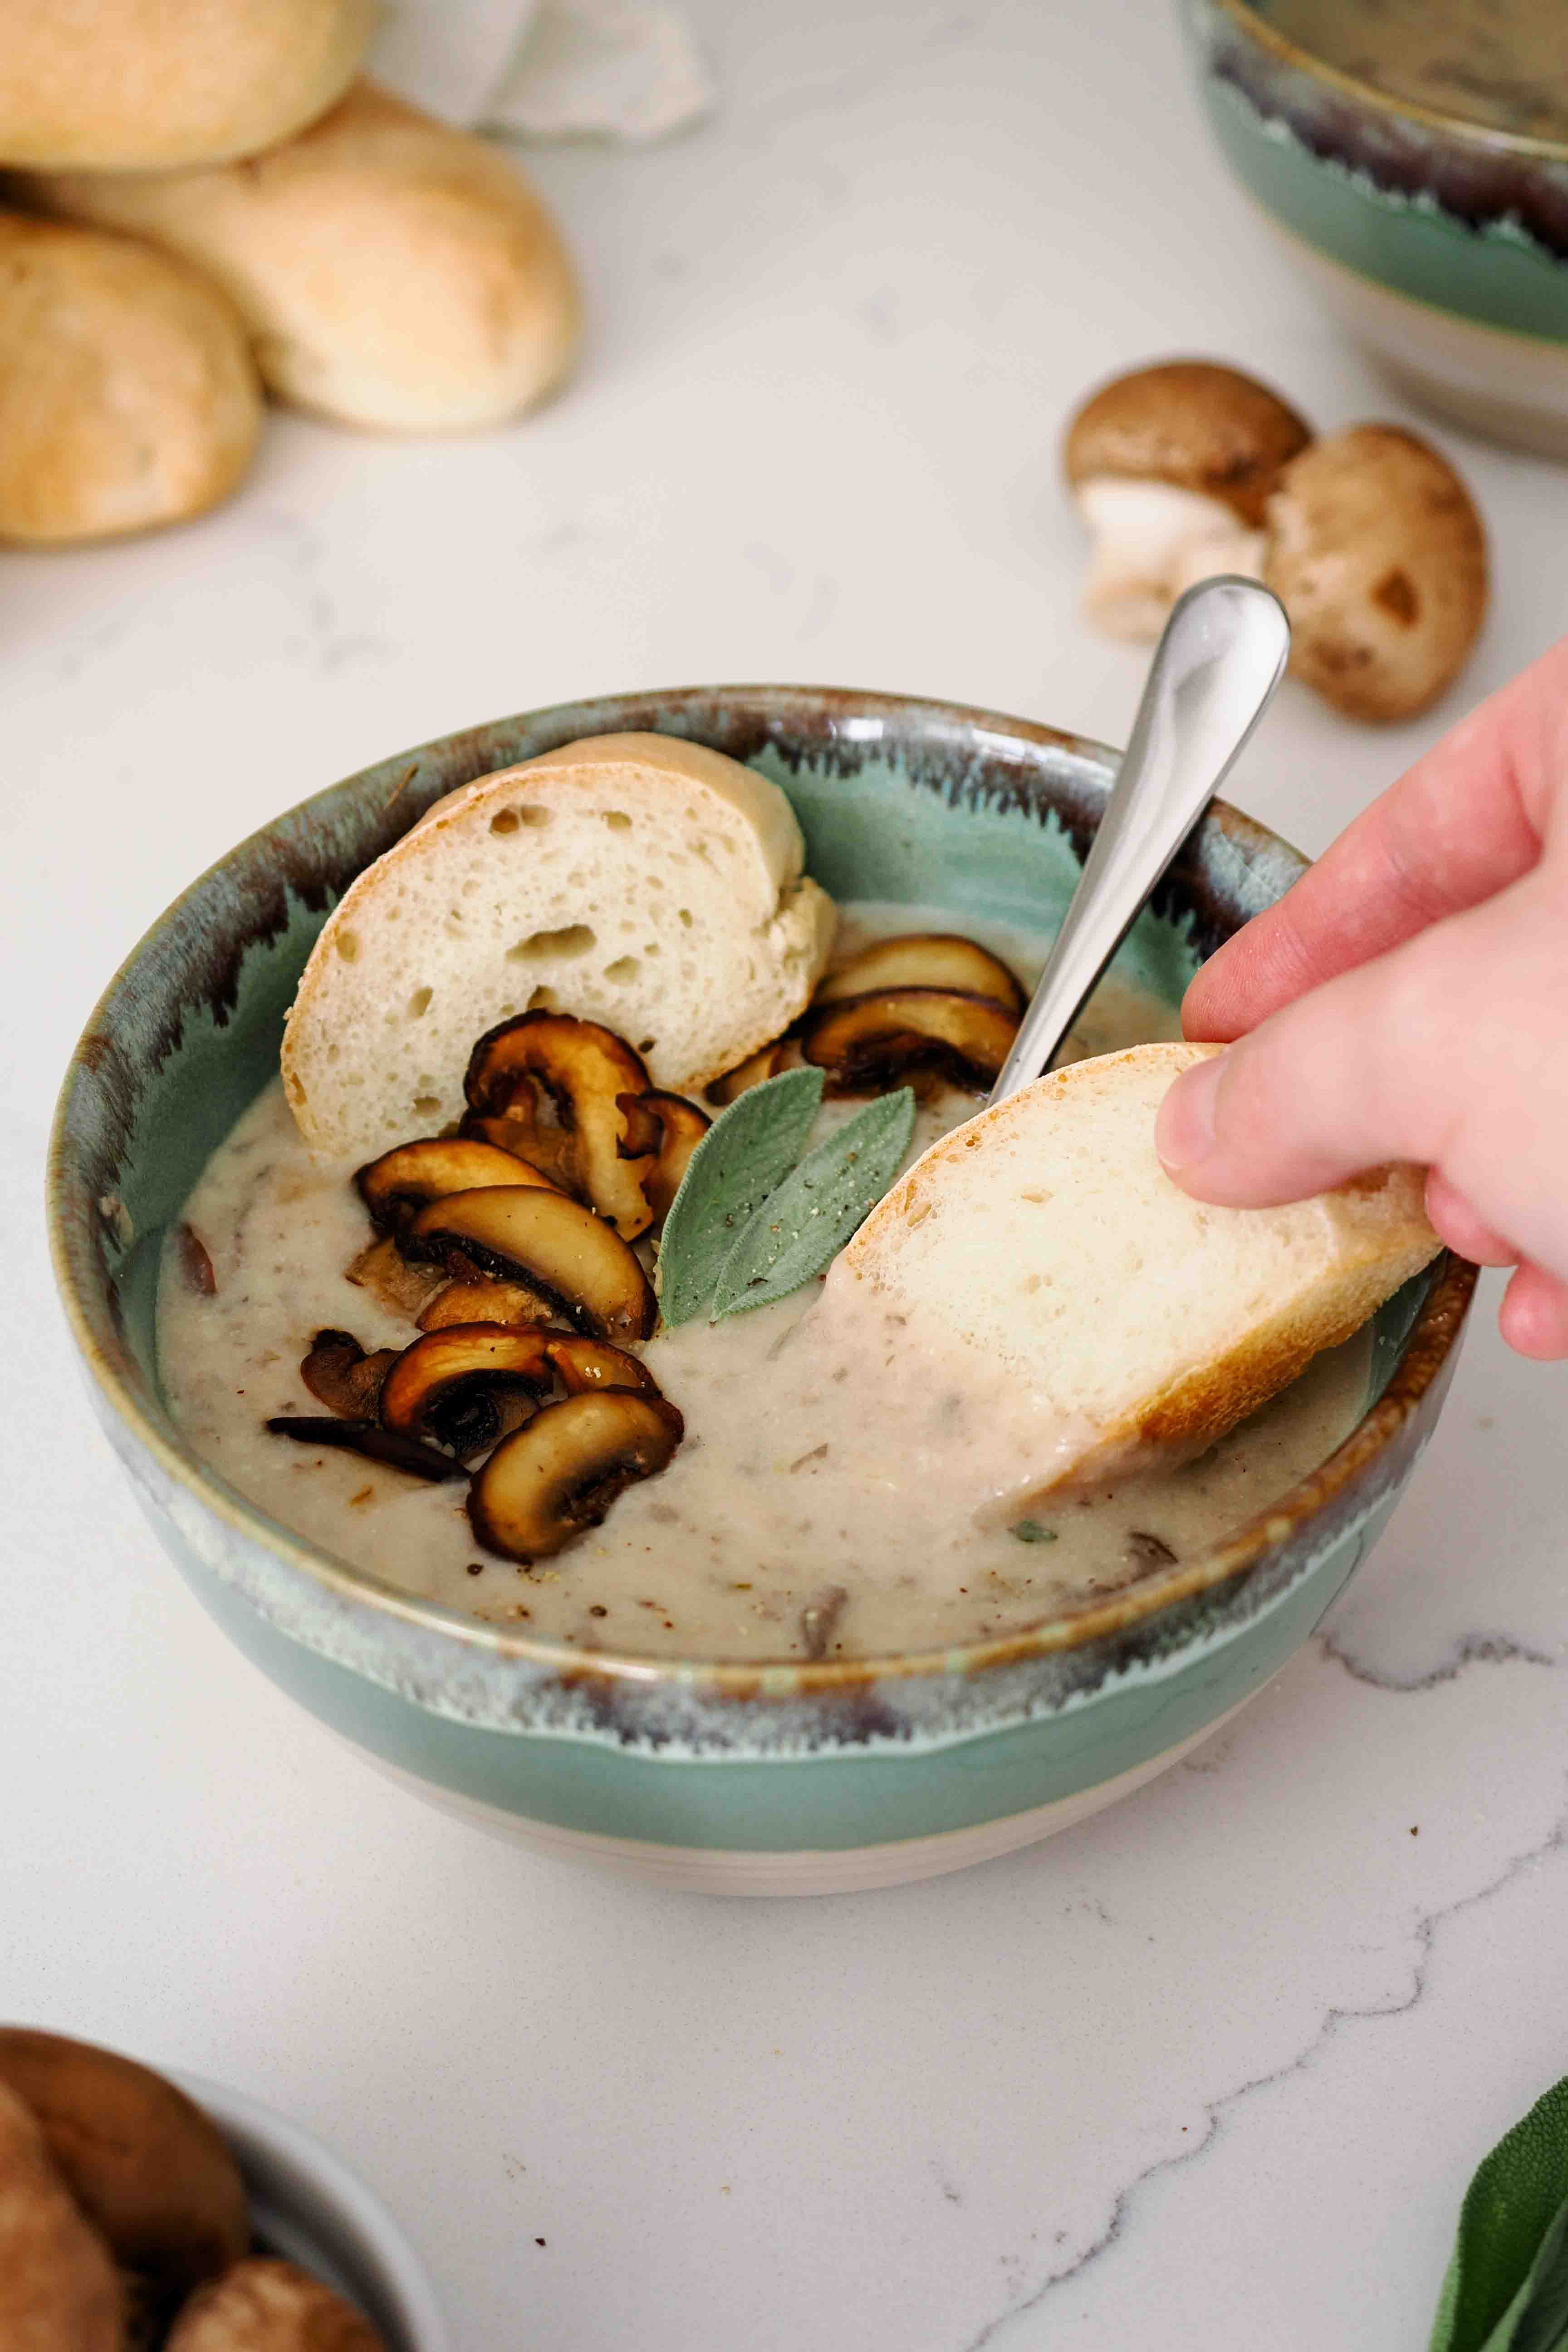 A hand dips a slice of bread into mushroom potato soup.